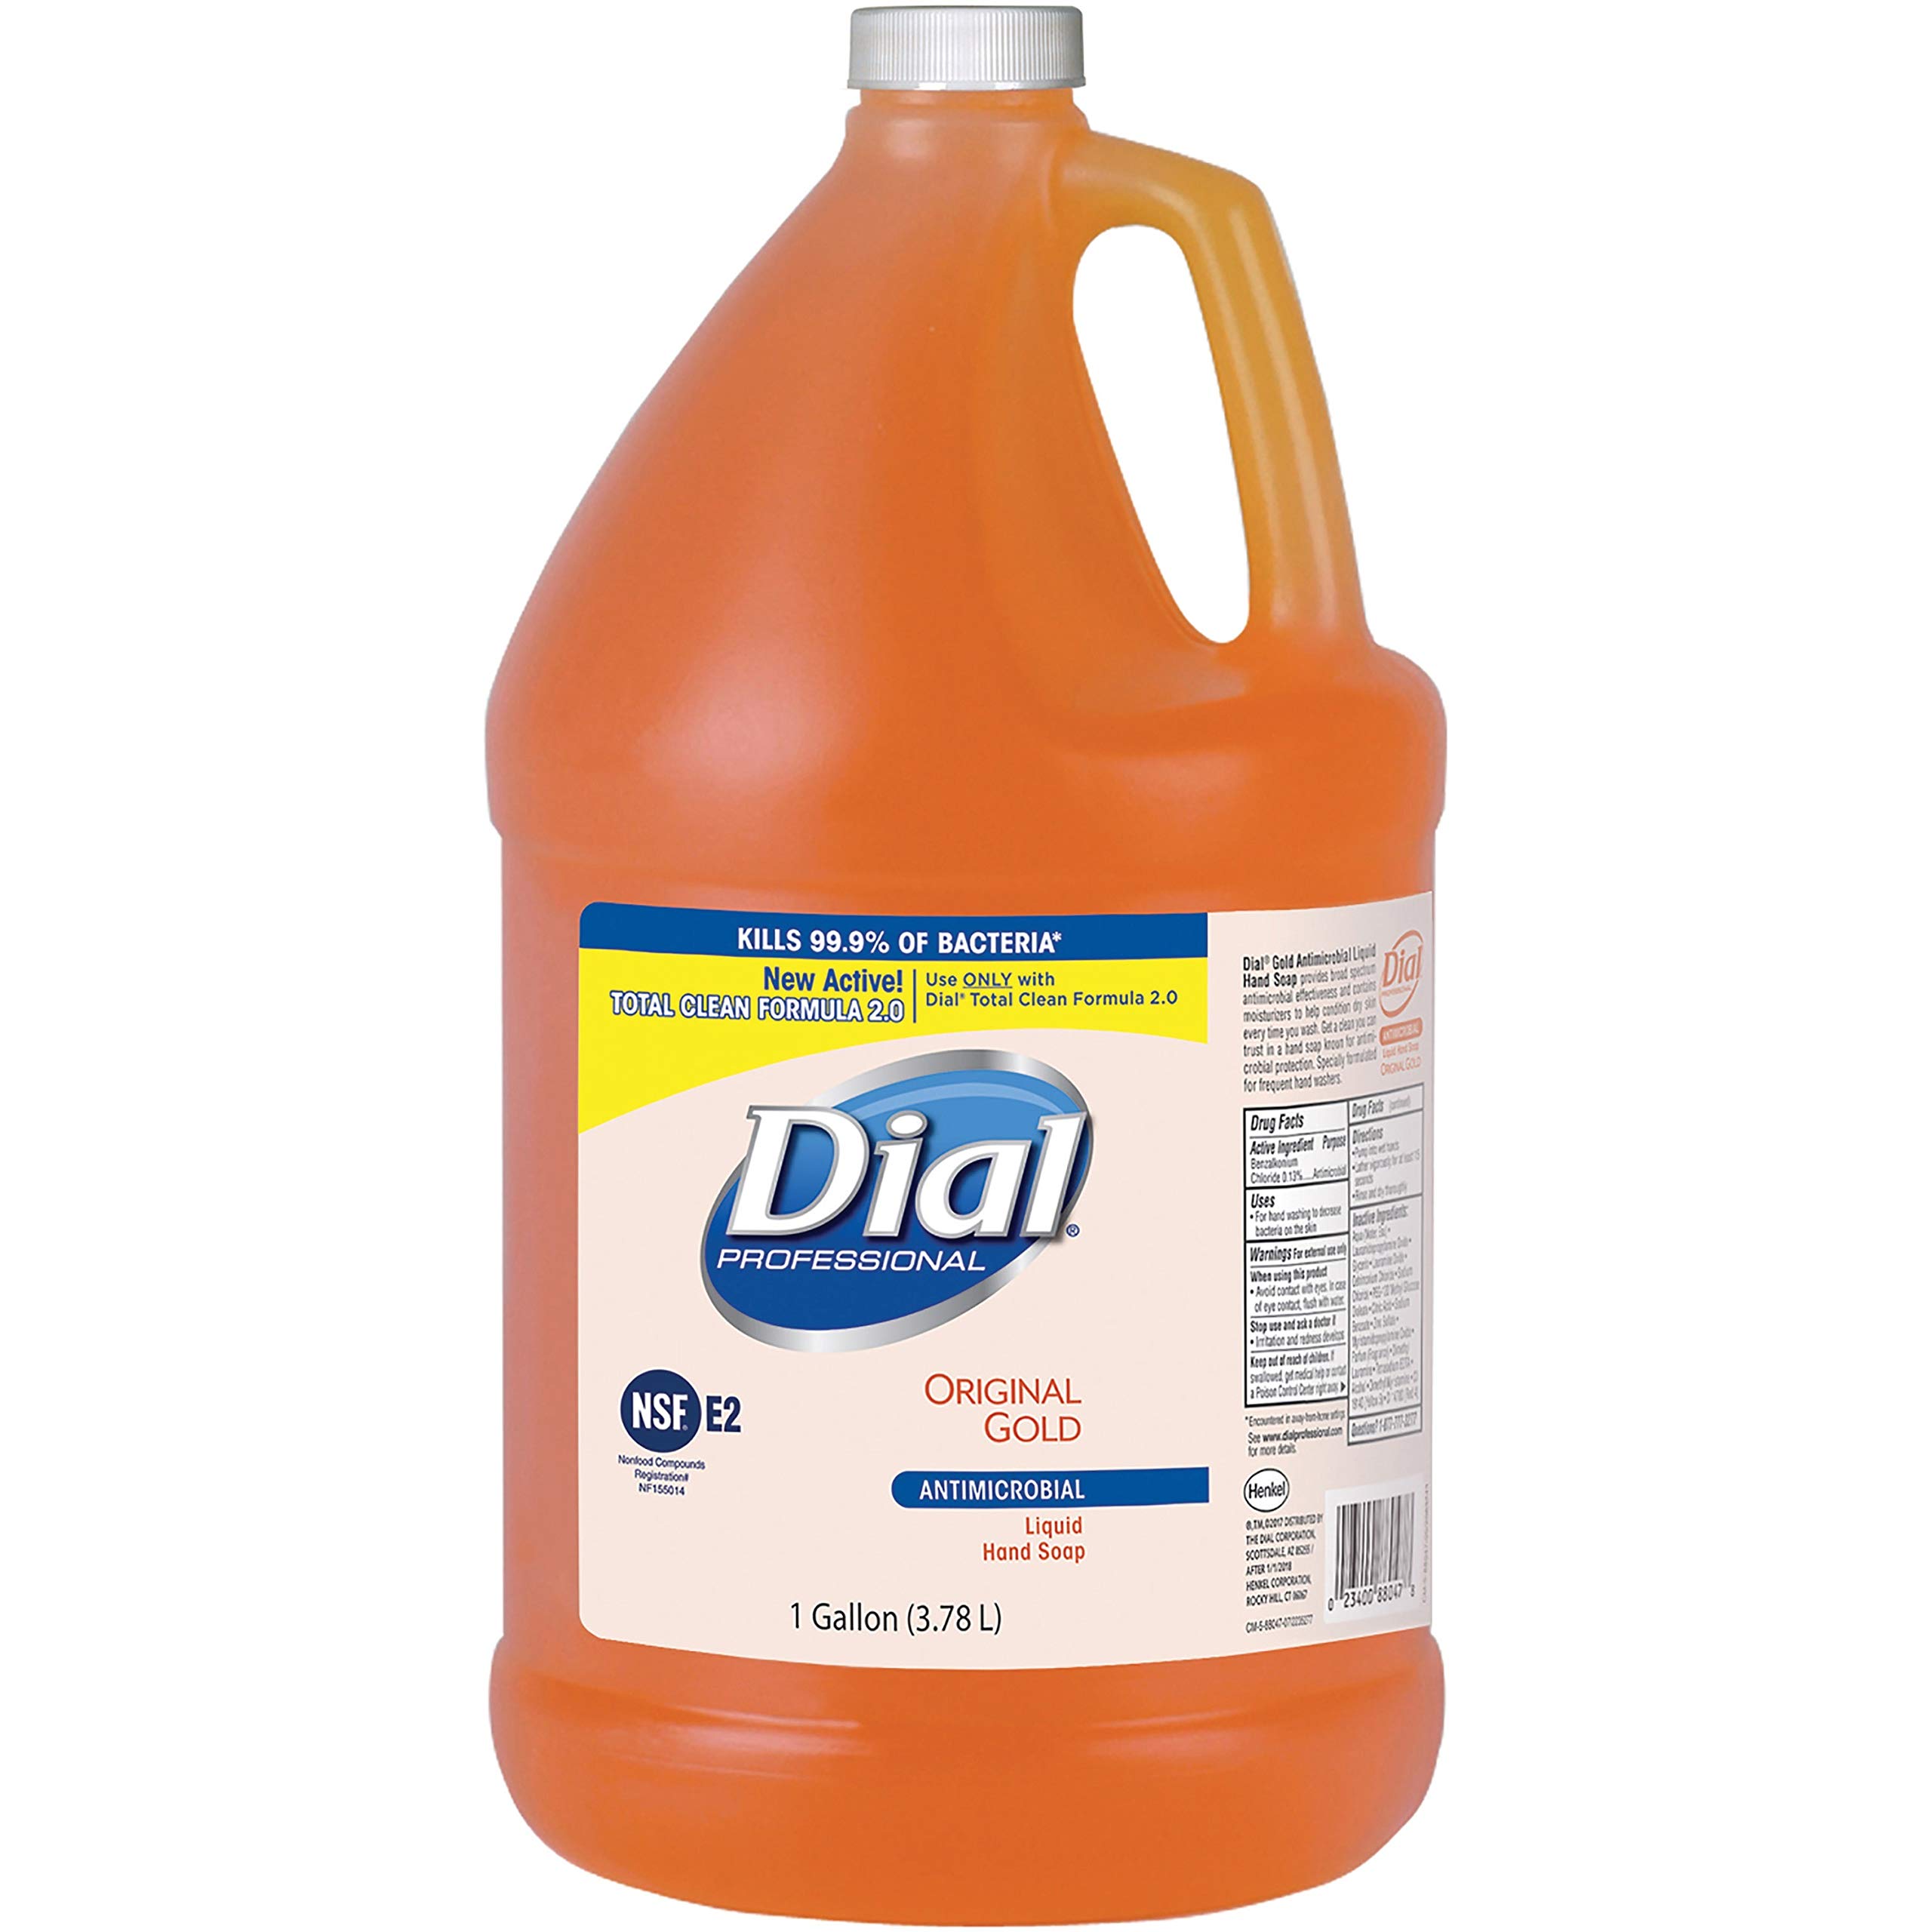 Dial Professional Original Gold Liquid Hand Soap Refill (Pack of 4)